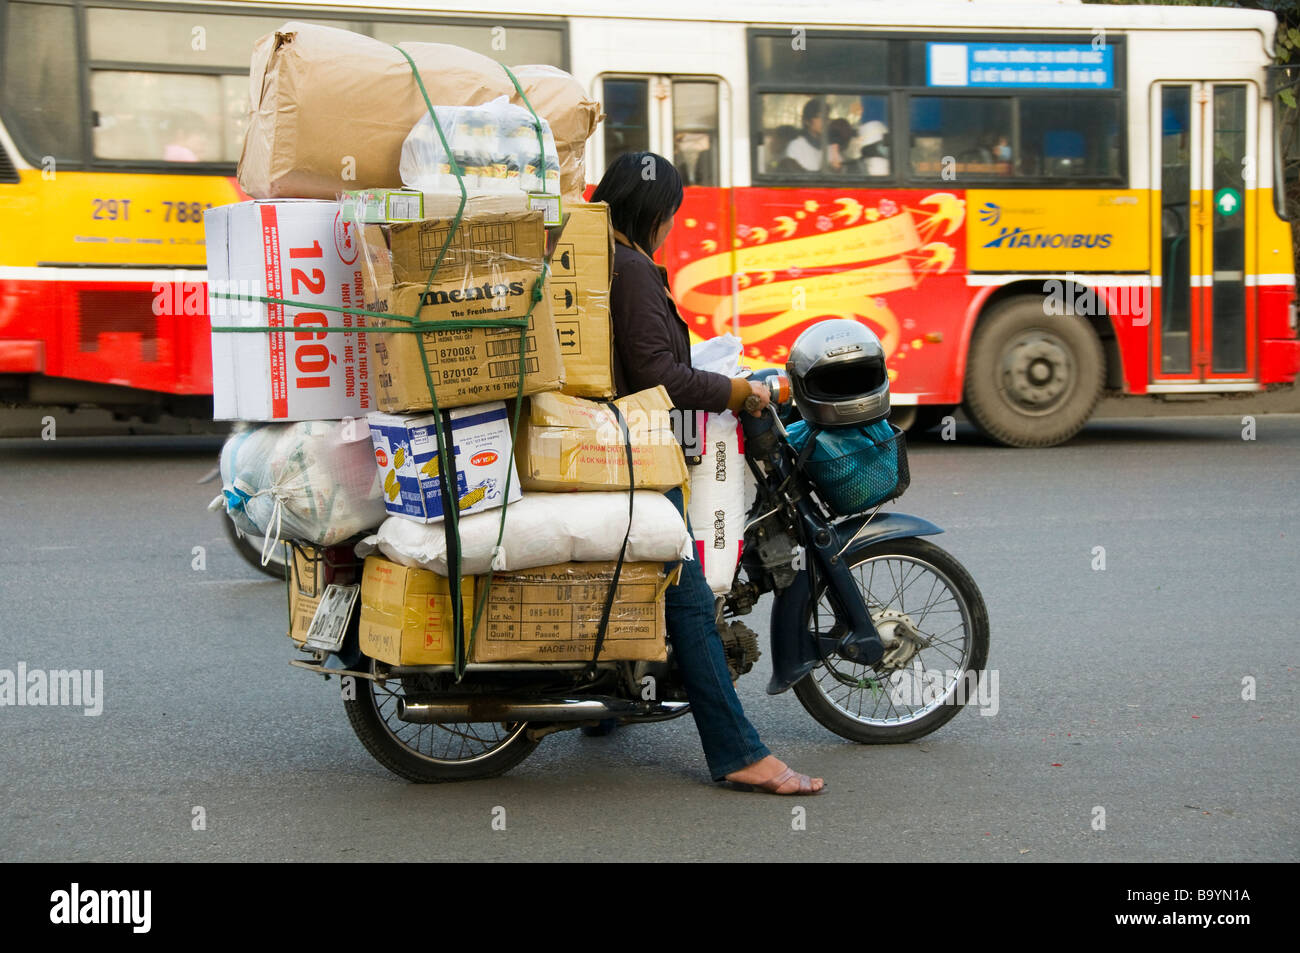 overloaded-motorcycle-in-hanoi-vietnam-B